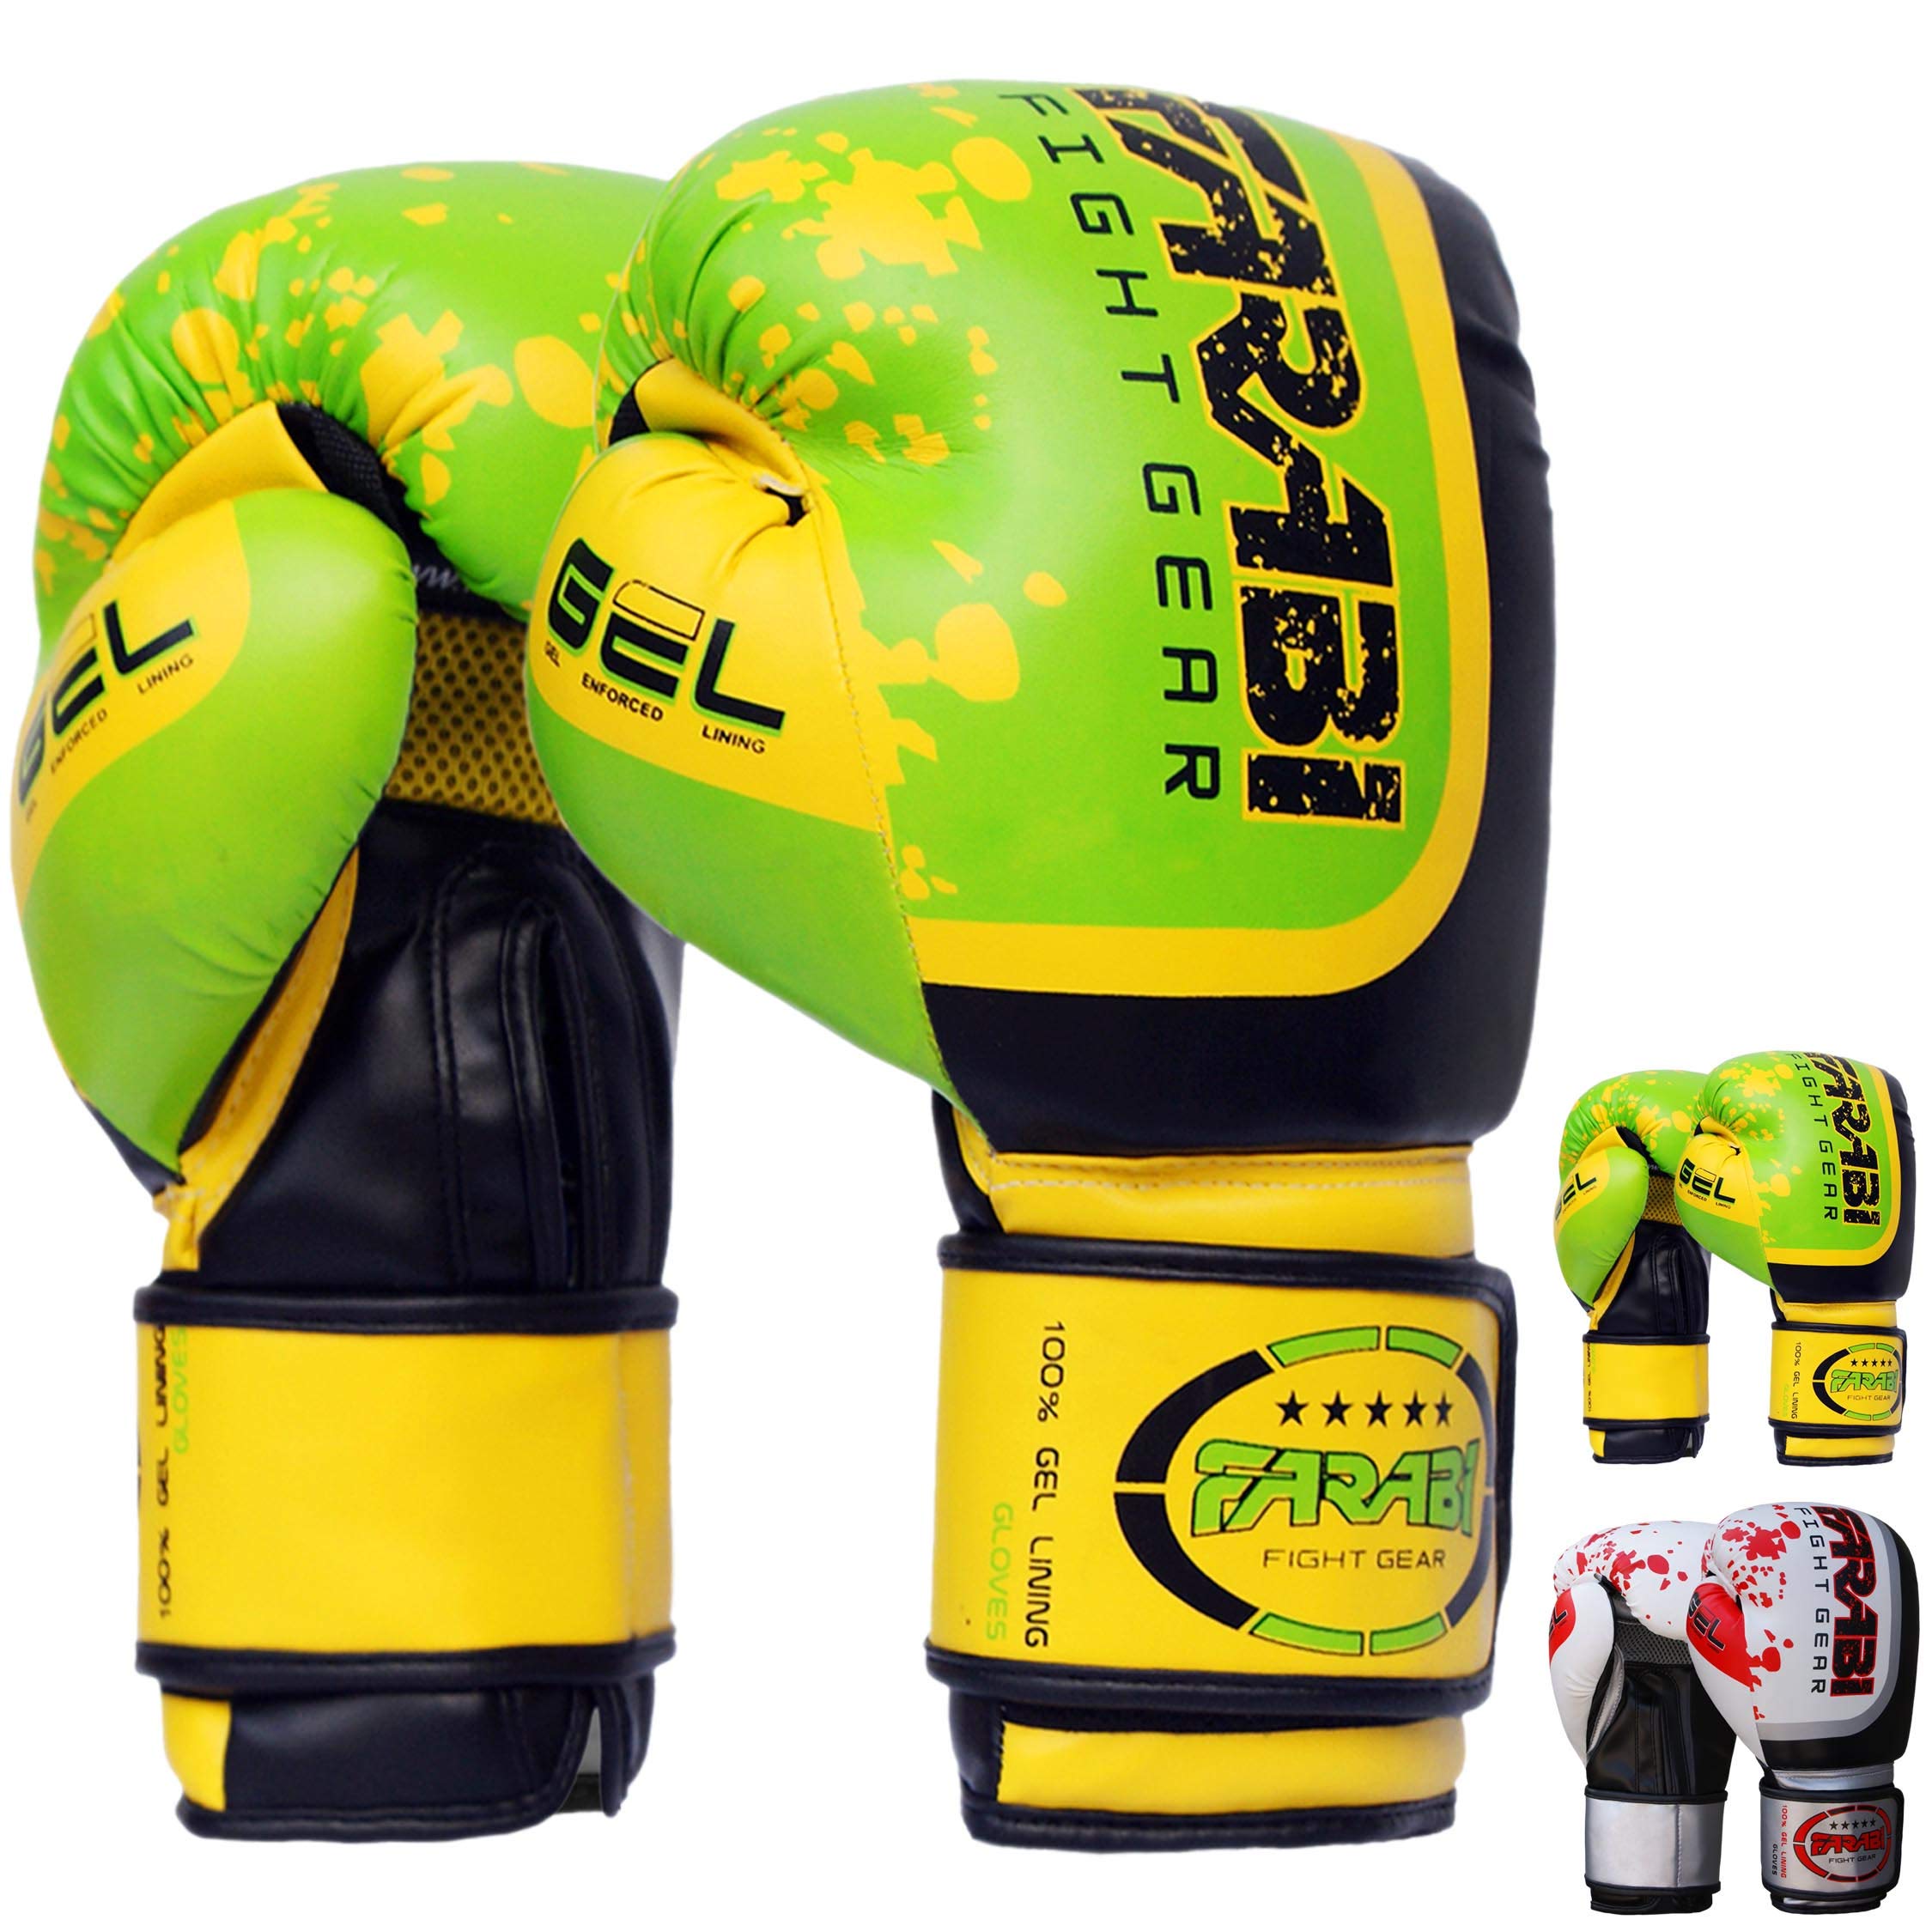 Farabi Boxing Gloves for Training Punching Sparring (Green Gell, 10-oz)